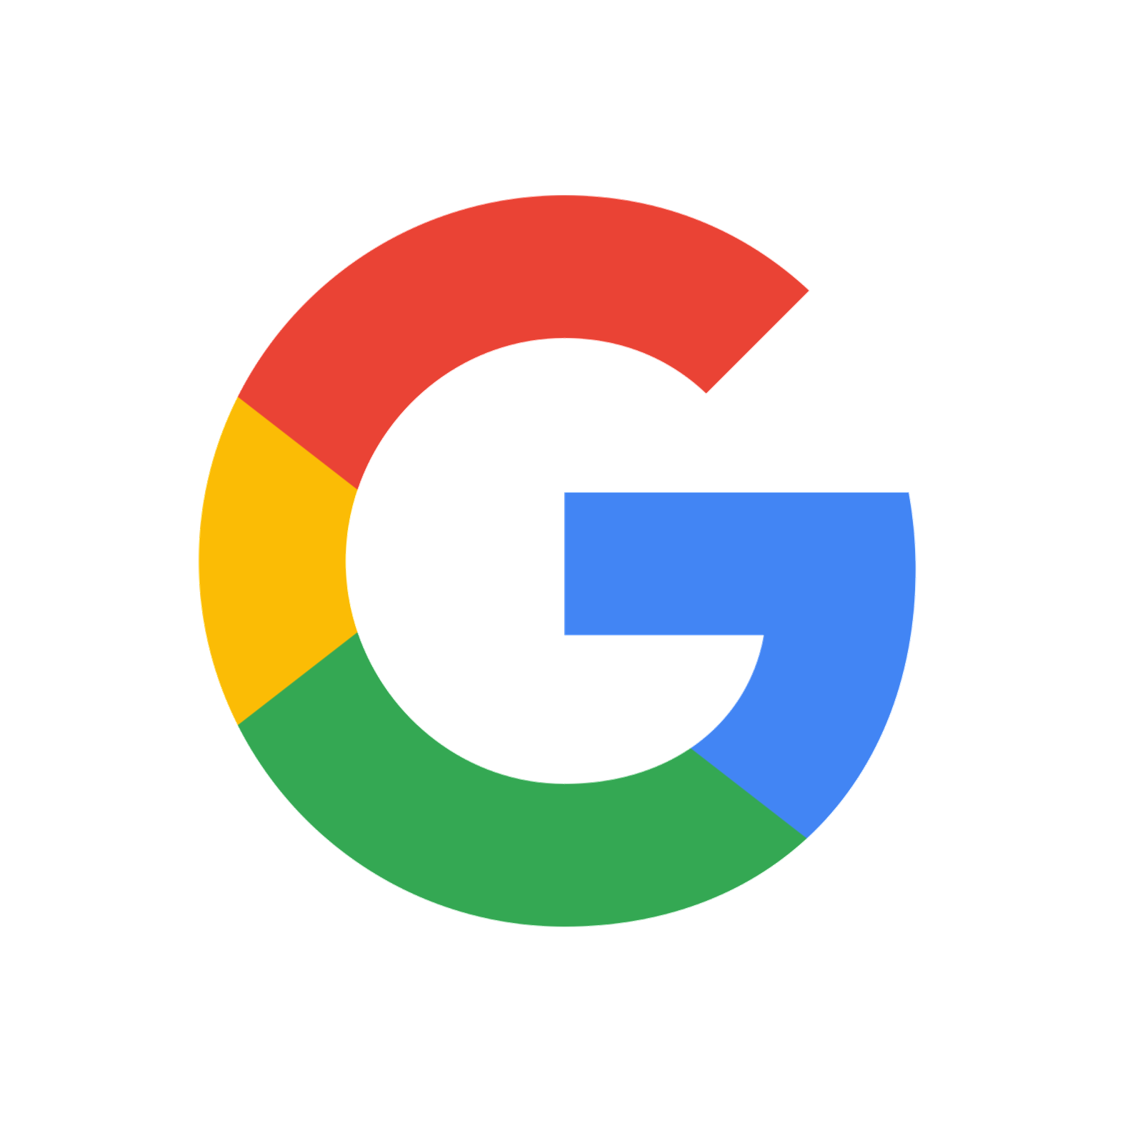 Google logo PNG images free download - Google Logo Gallery